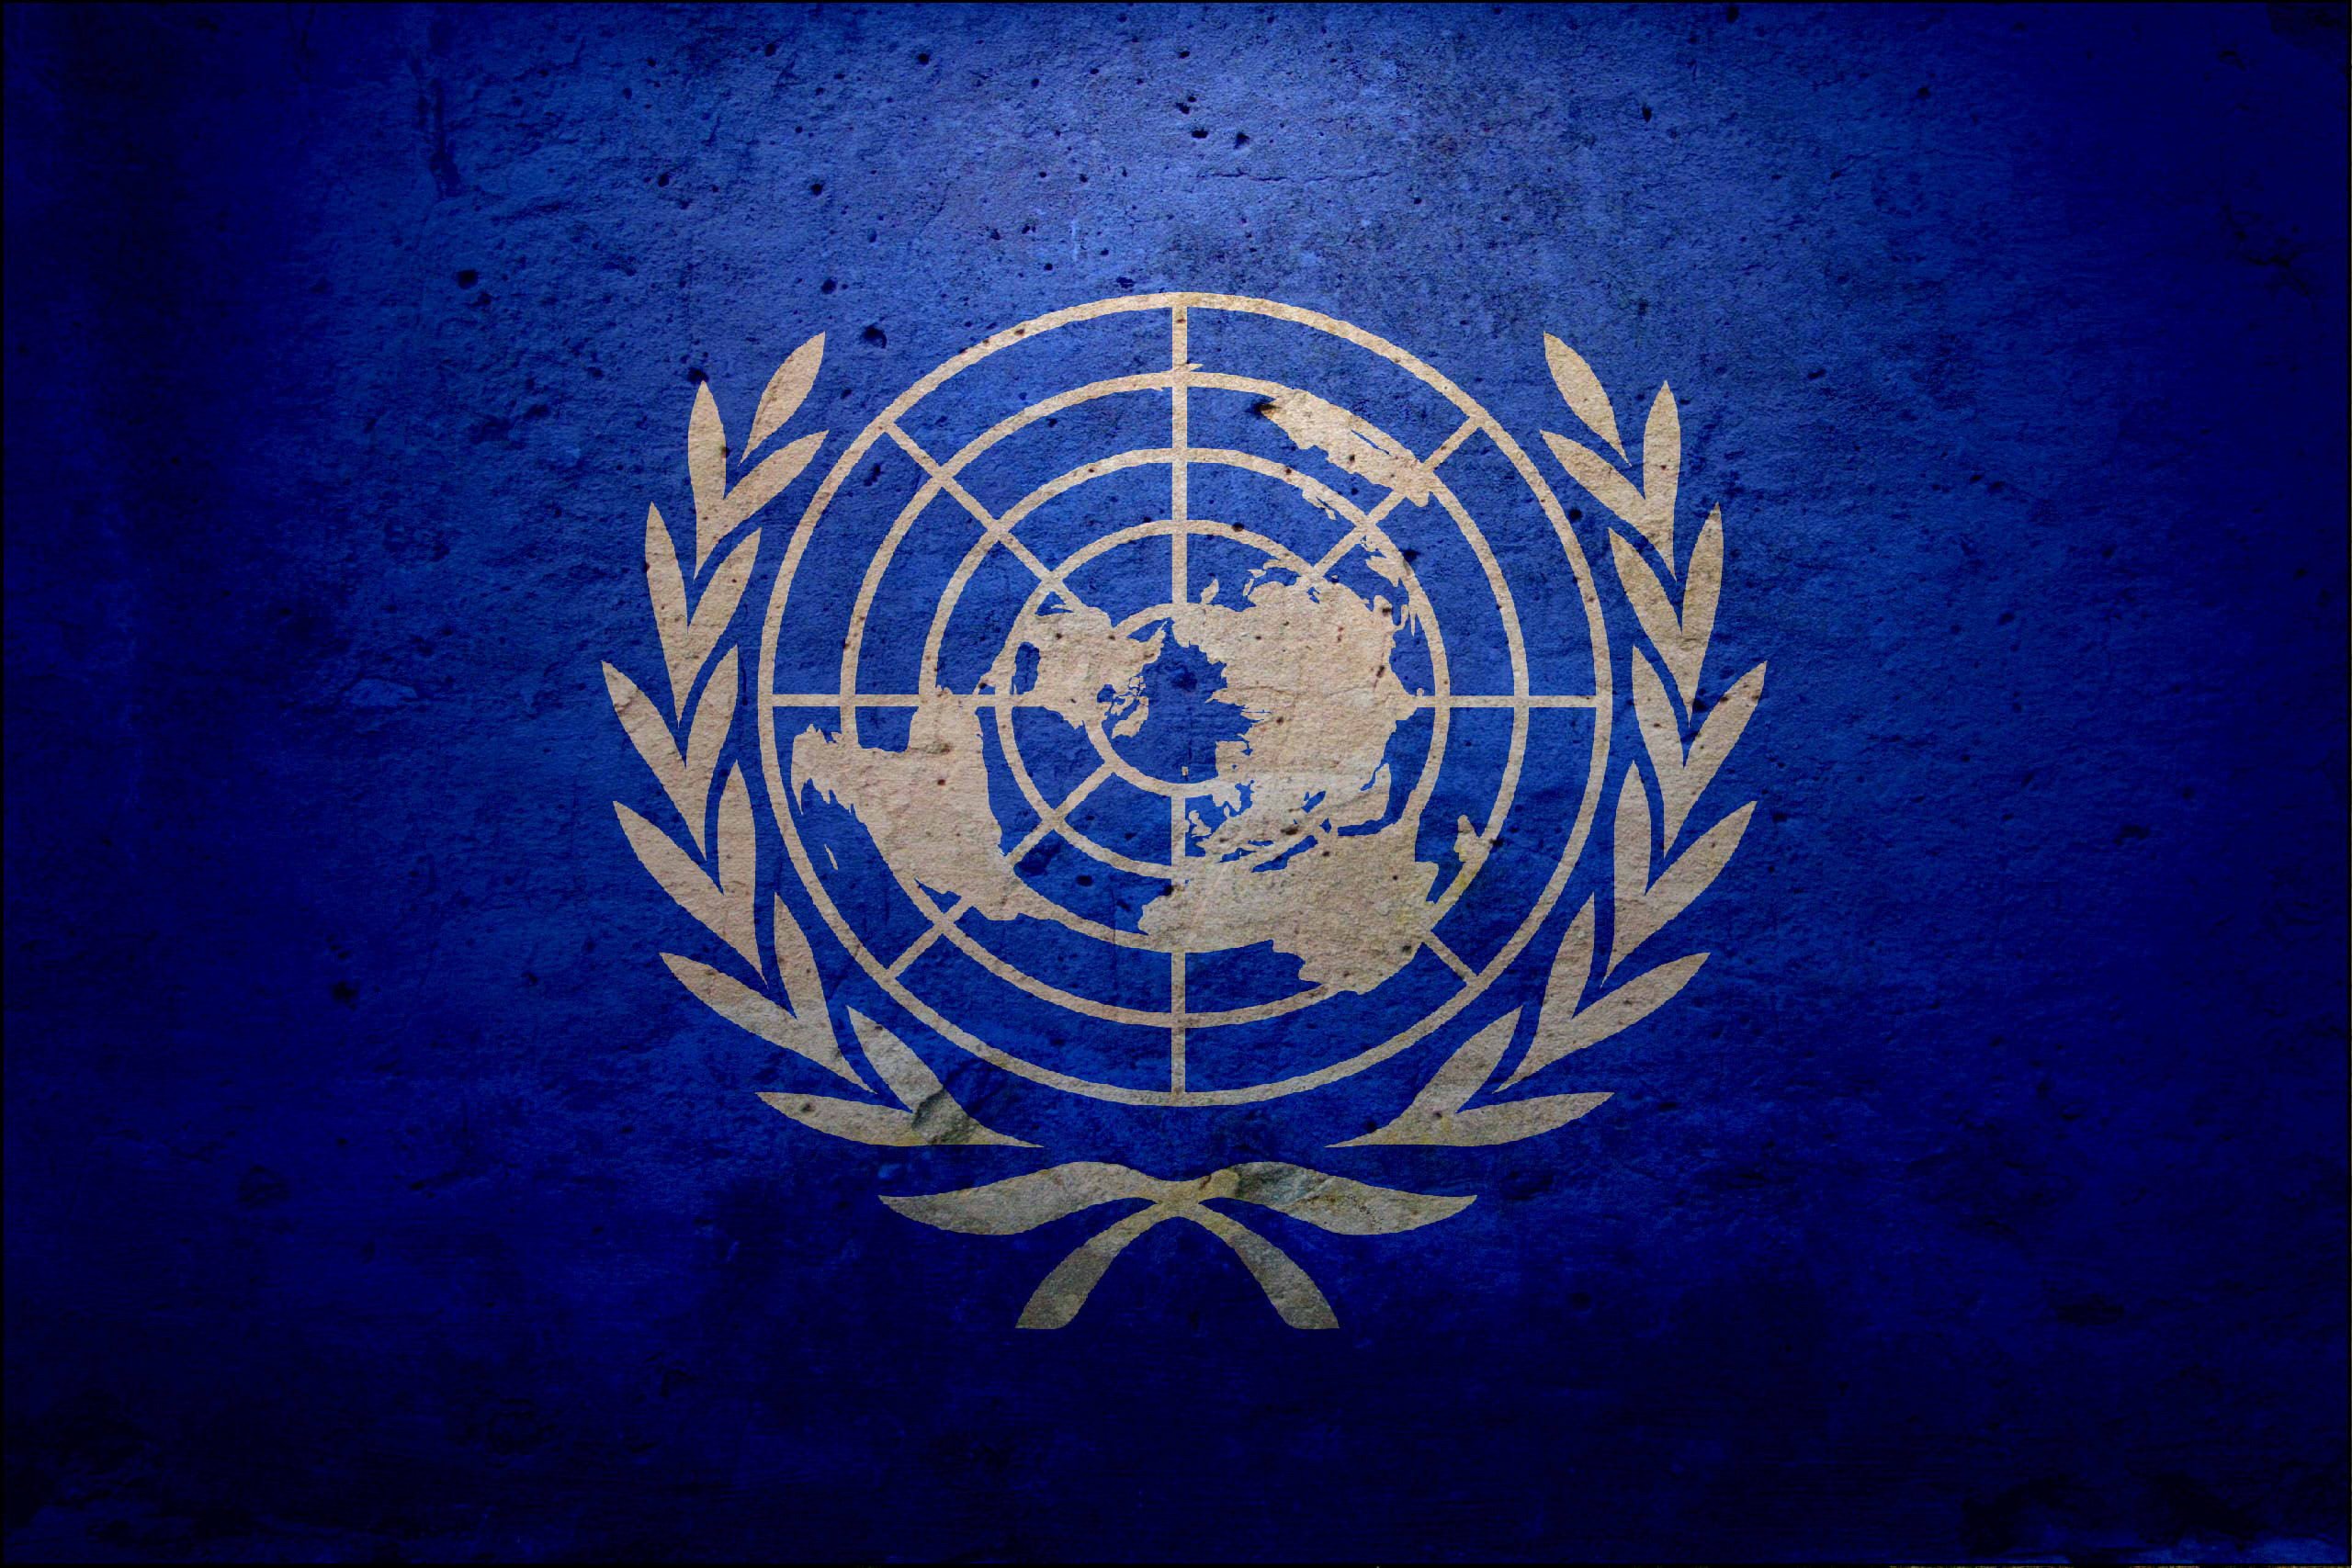 Оон n. Флаг ООН. Флаг организации Объединенных наций. Флаг ООН флаг ООН. Флаг ООН плоская земля.